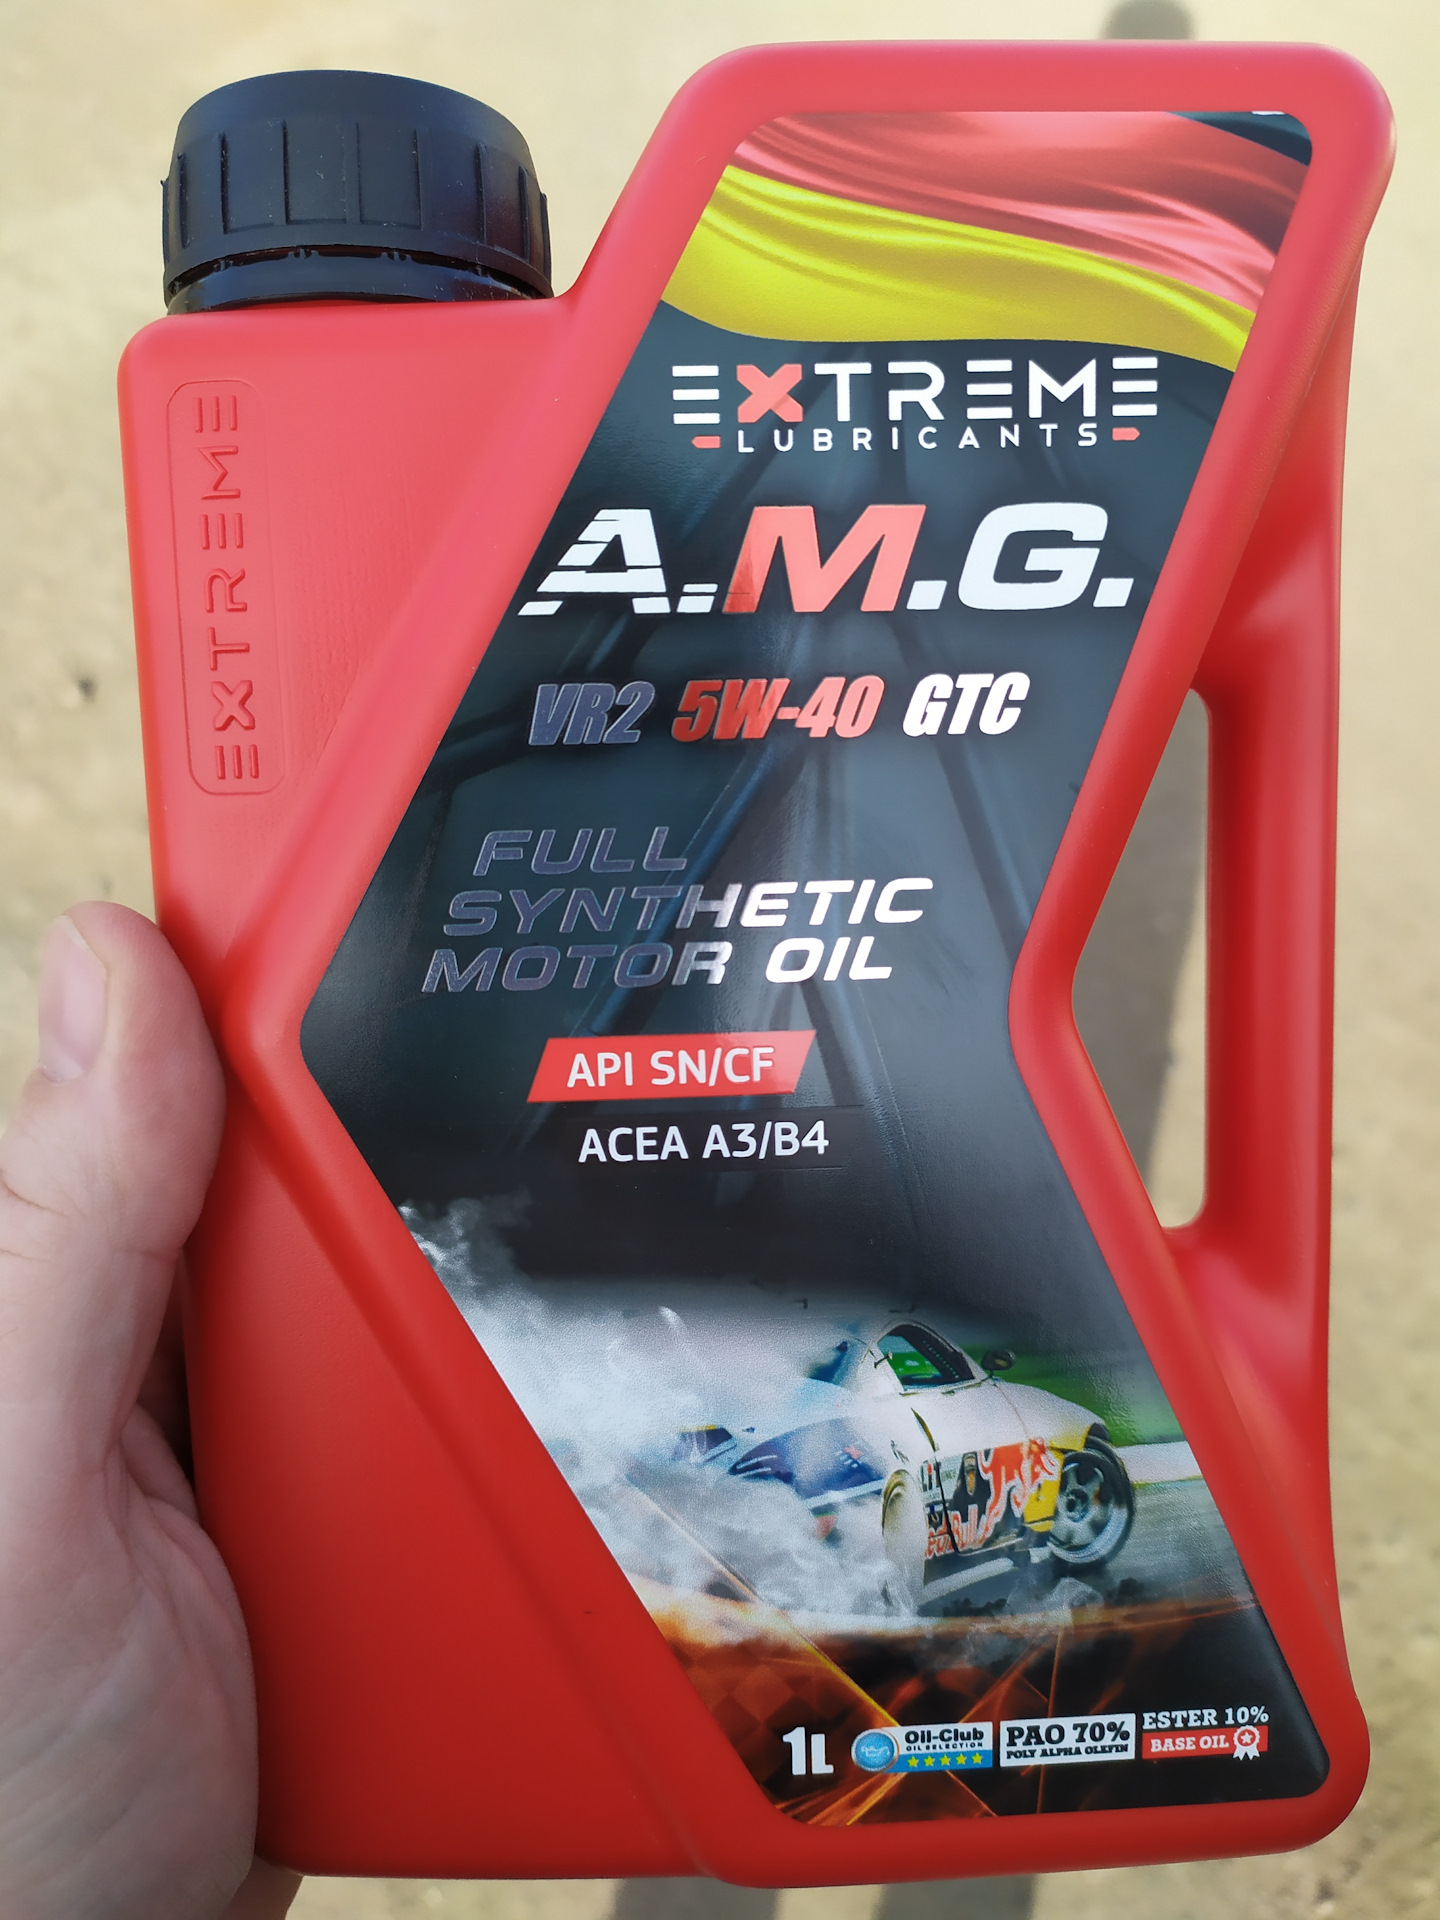 Extreme 5w30 купить. Extreme AMG 5w40. Масло AMG extreme 5w40. Extreme vr2 5w-40. Extreme AMG vr2 5w-40 GTC.